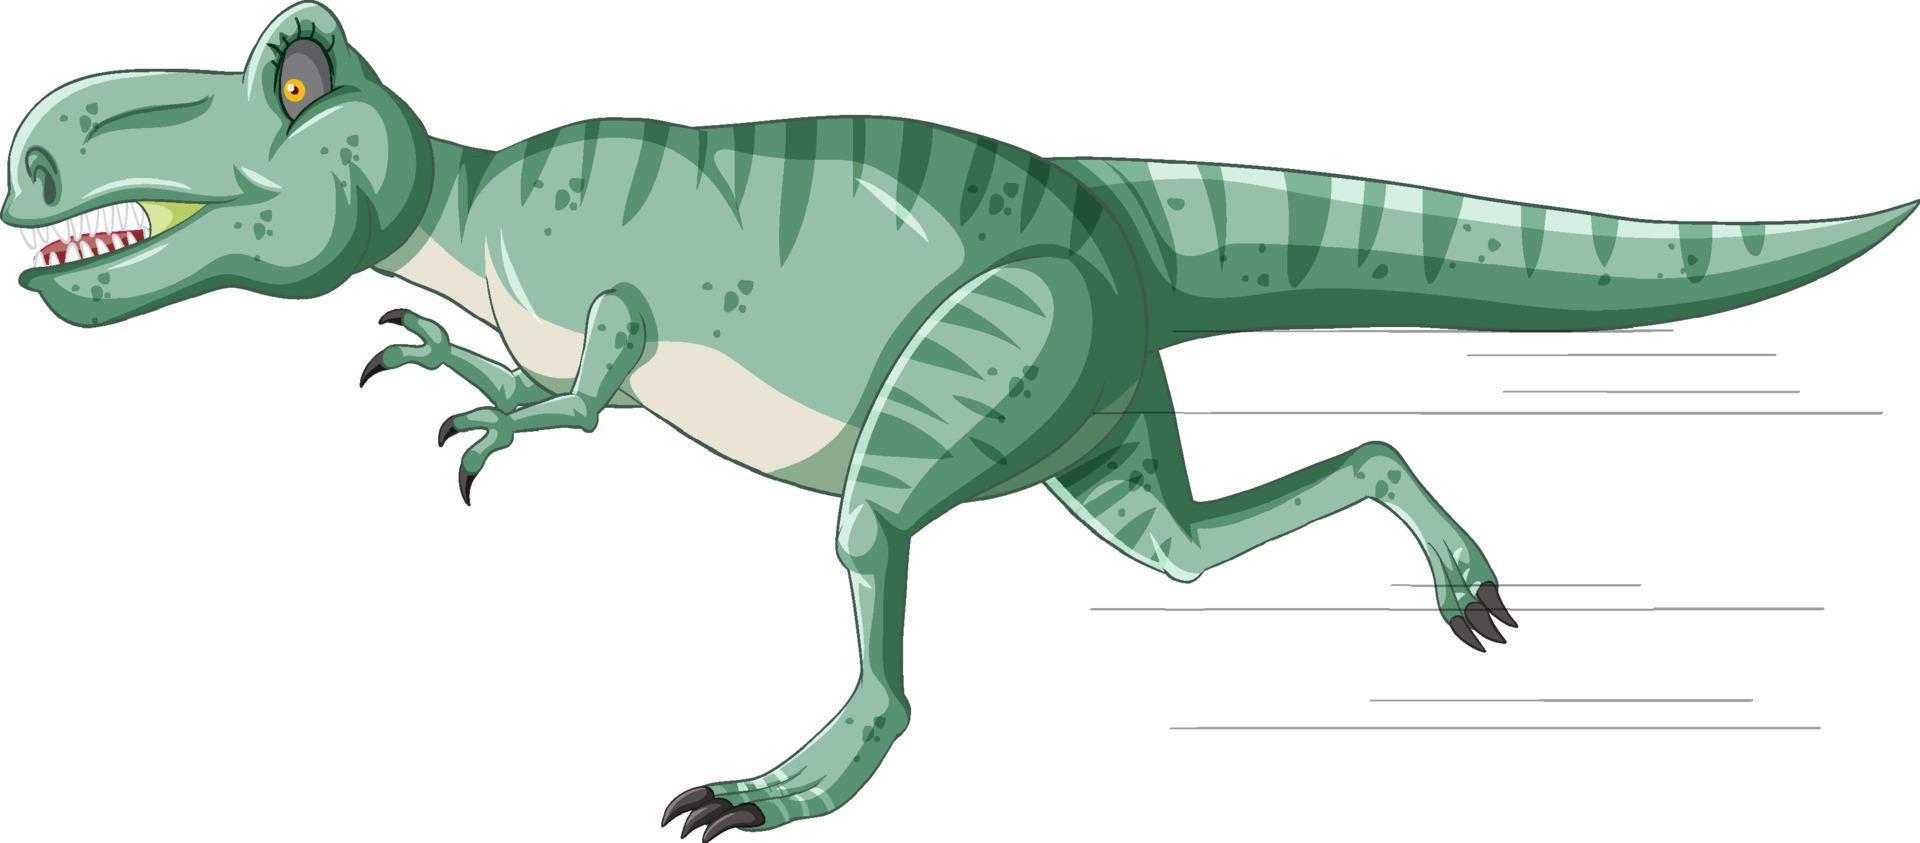 Cartoon tyrannosaurus rex in running pose vector